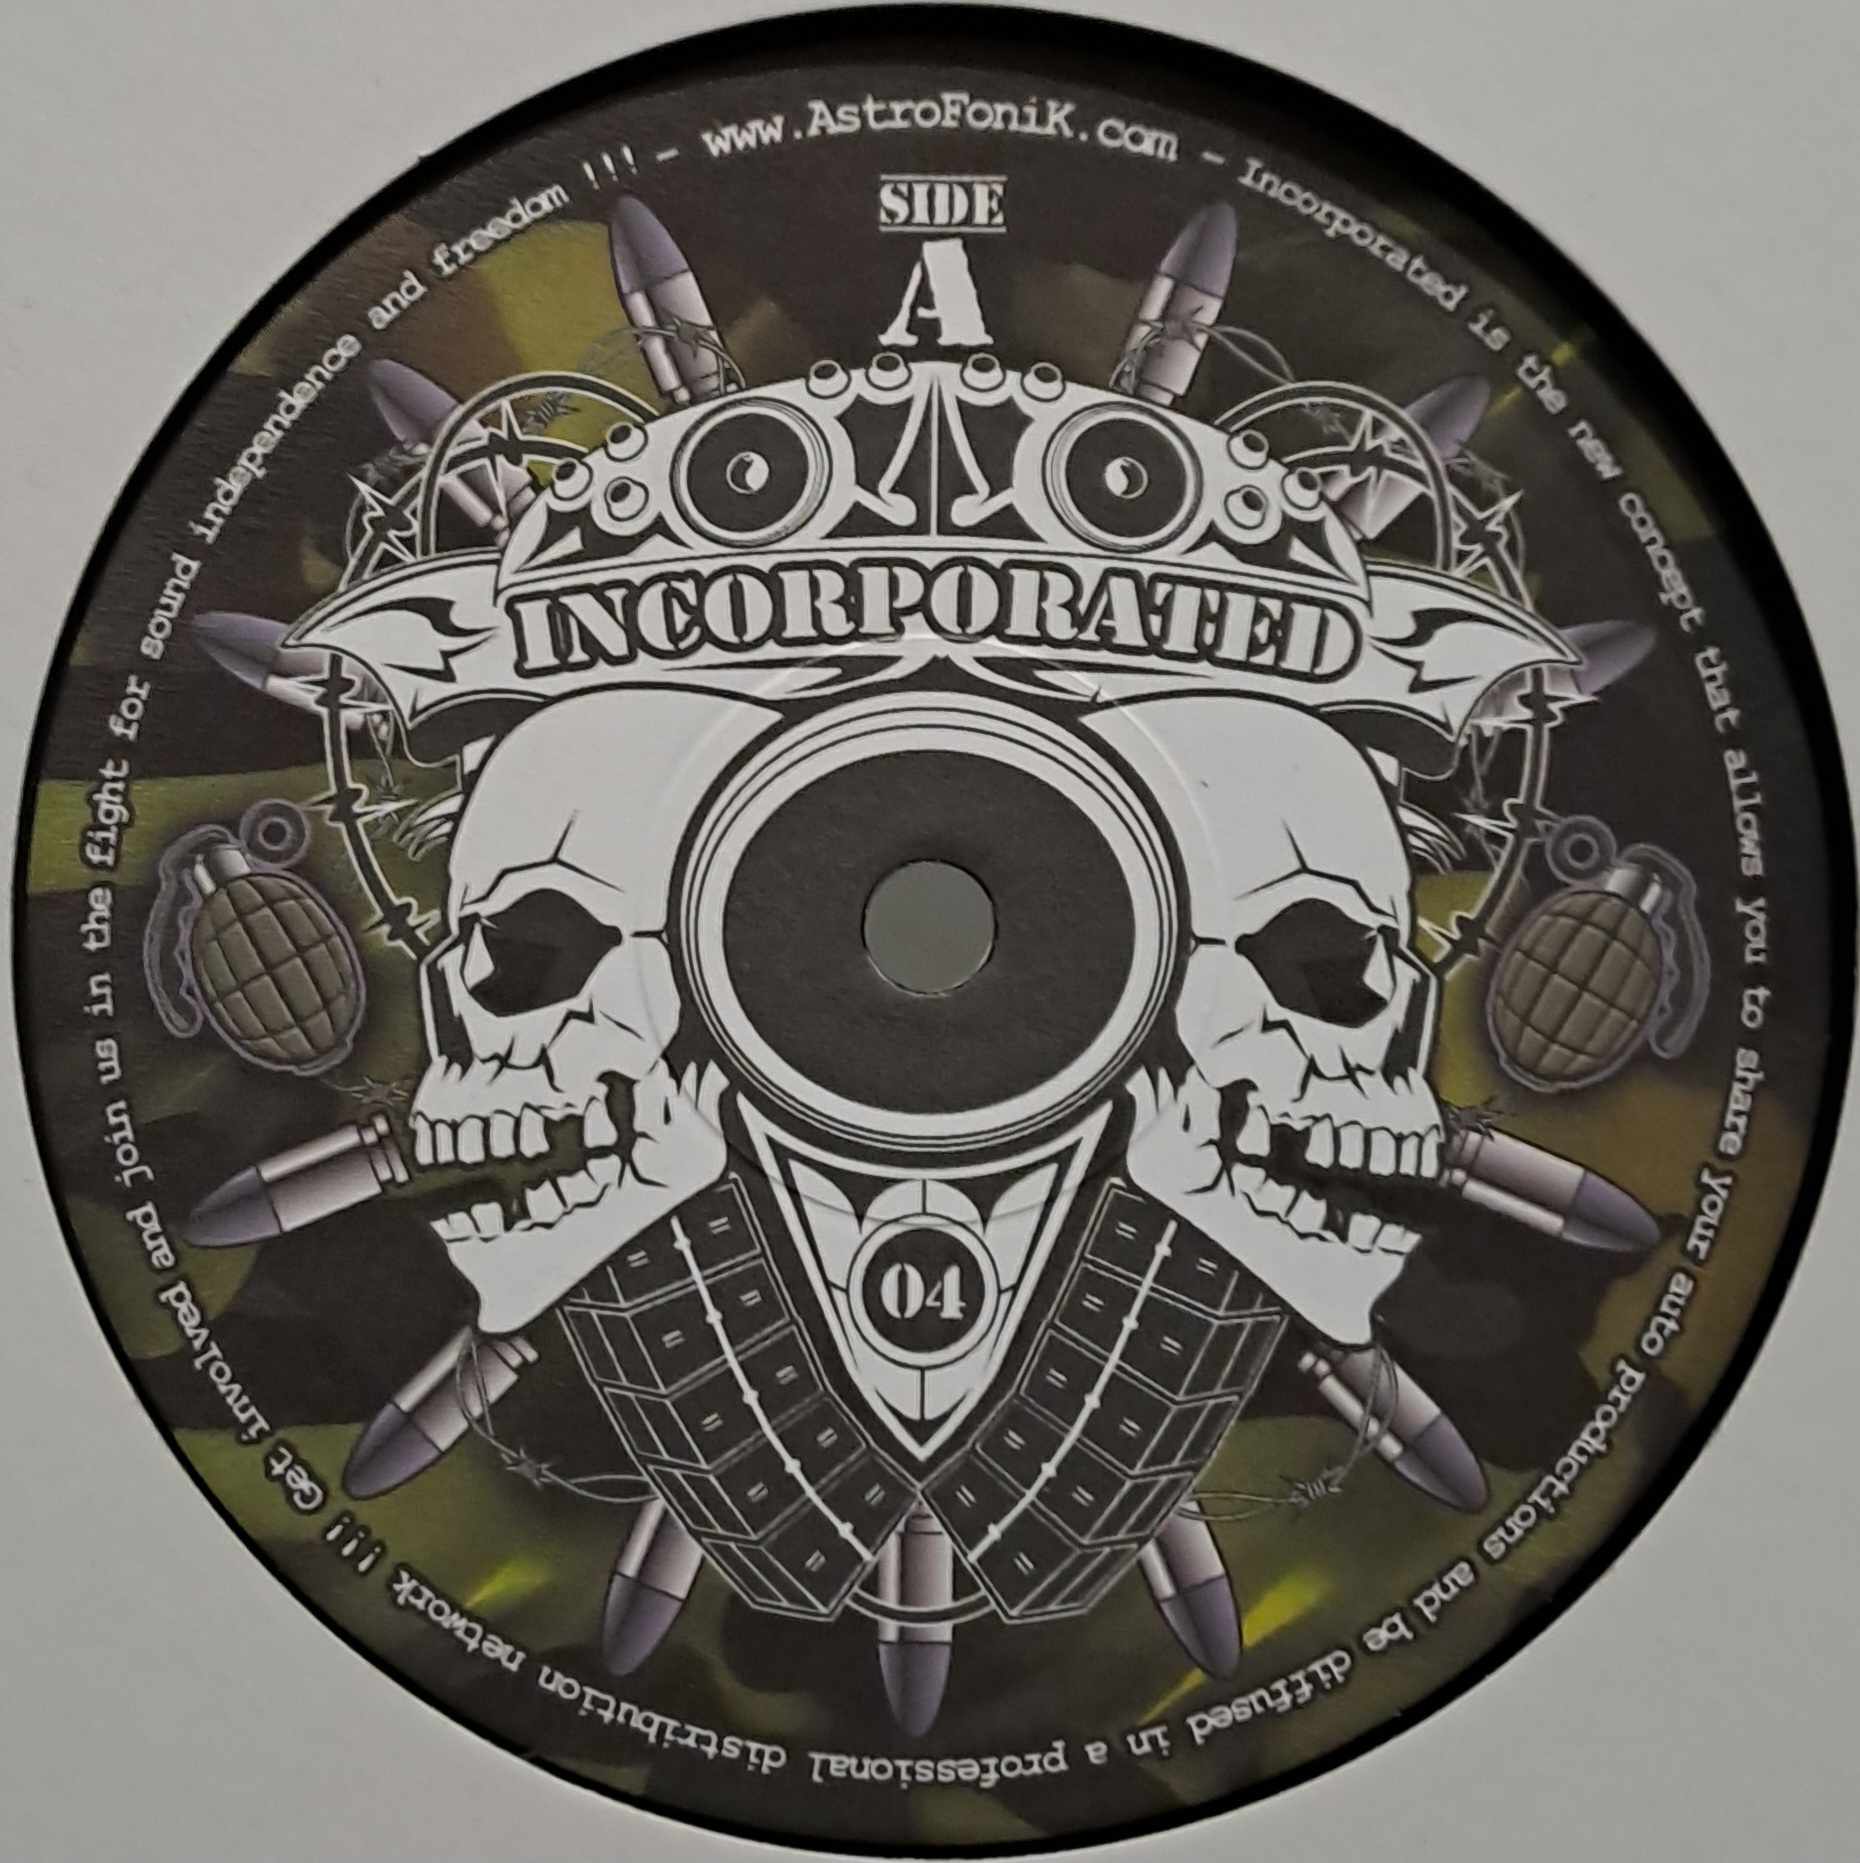 Incorporated 04 - vinyle tribecore